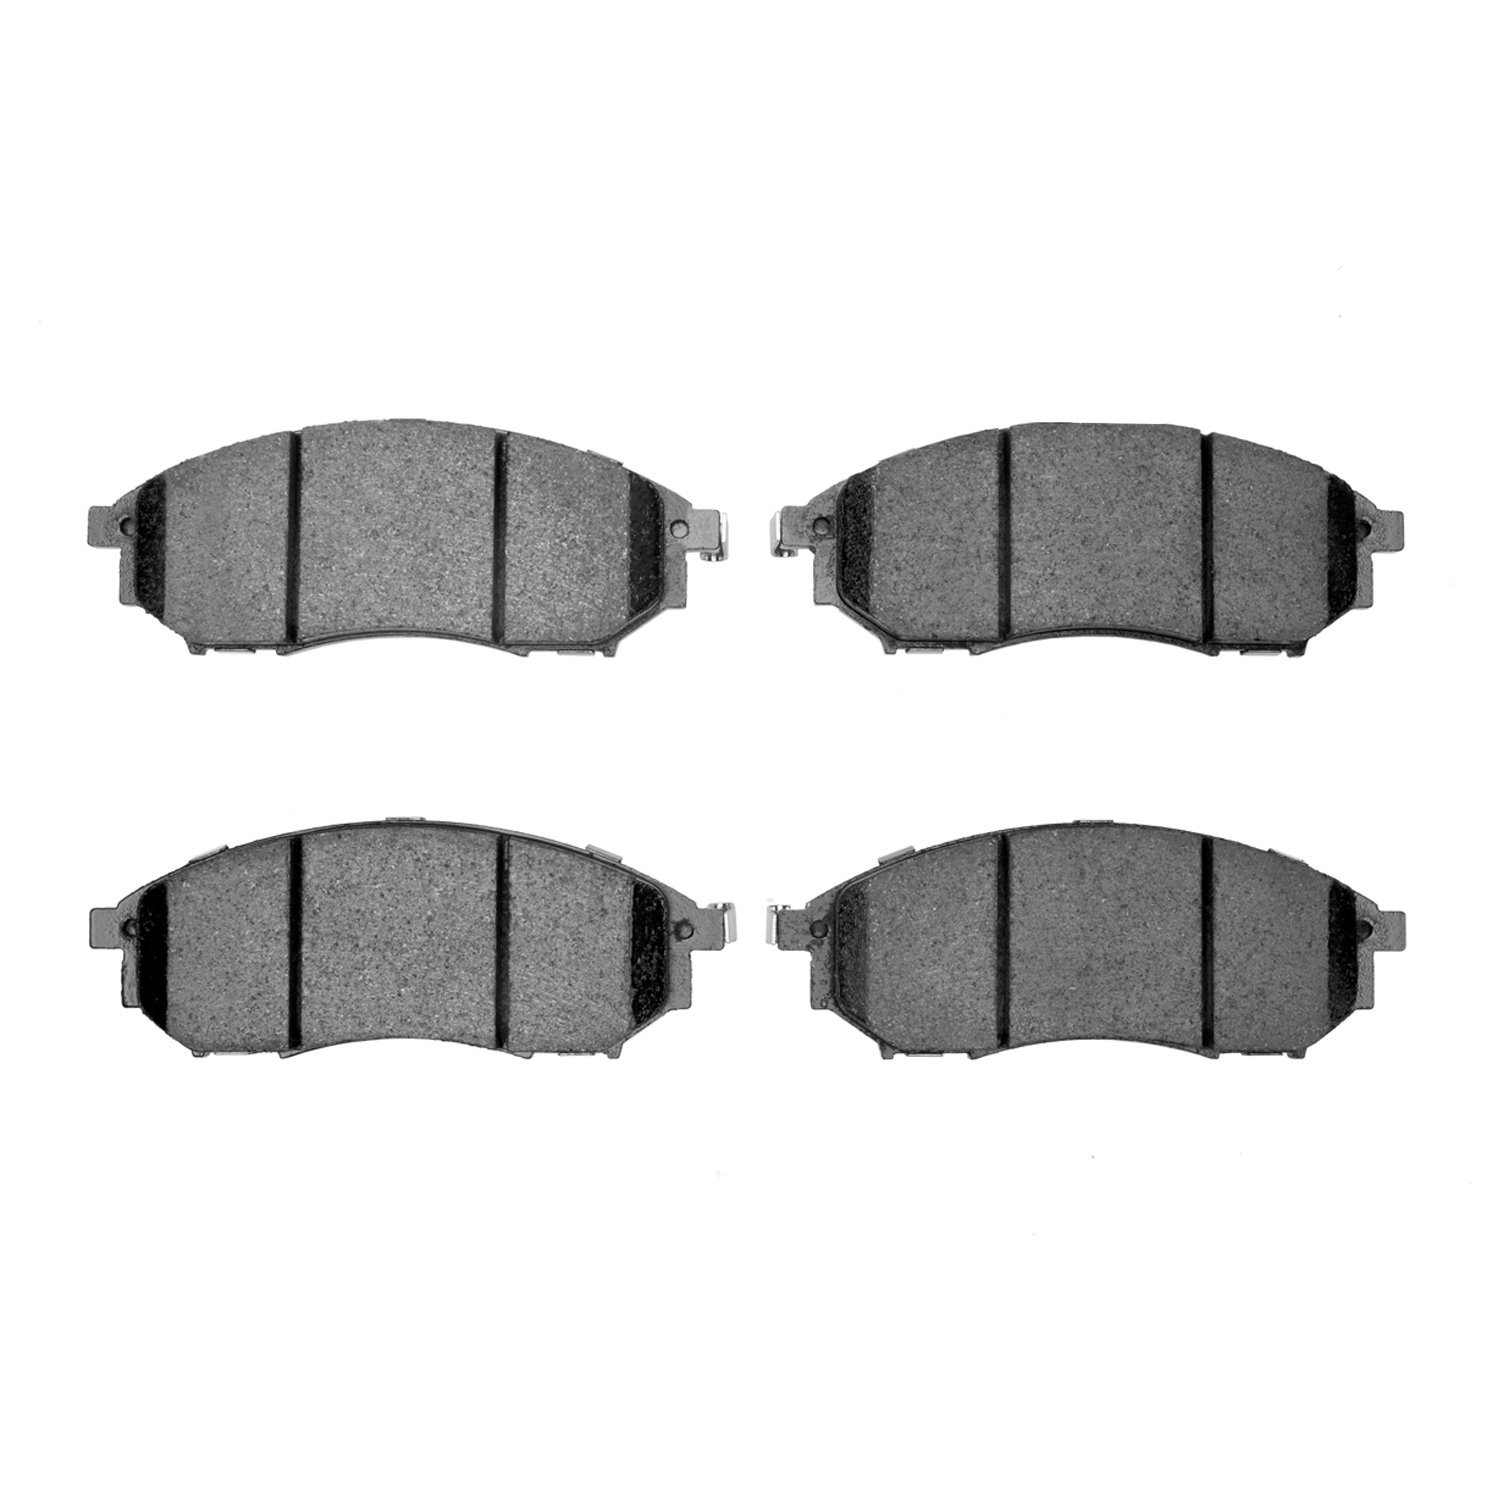 Semi-Metallic Brake Pads, 2002-2020 Fits Multiple Makes/Models, Position: Front